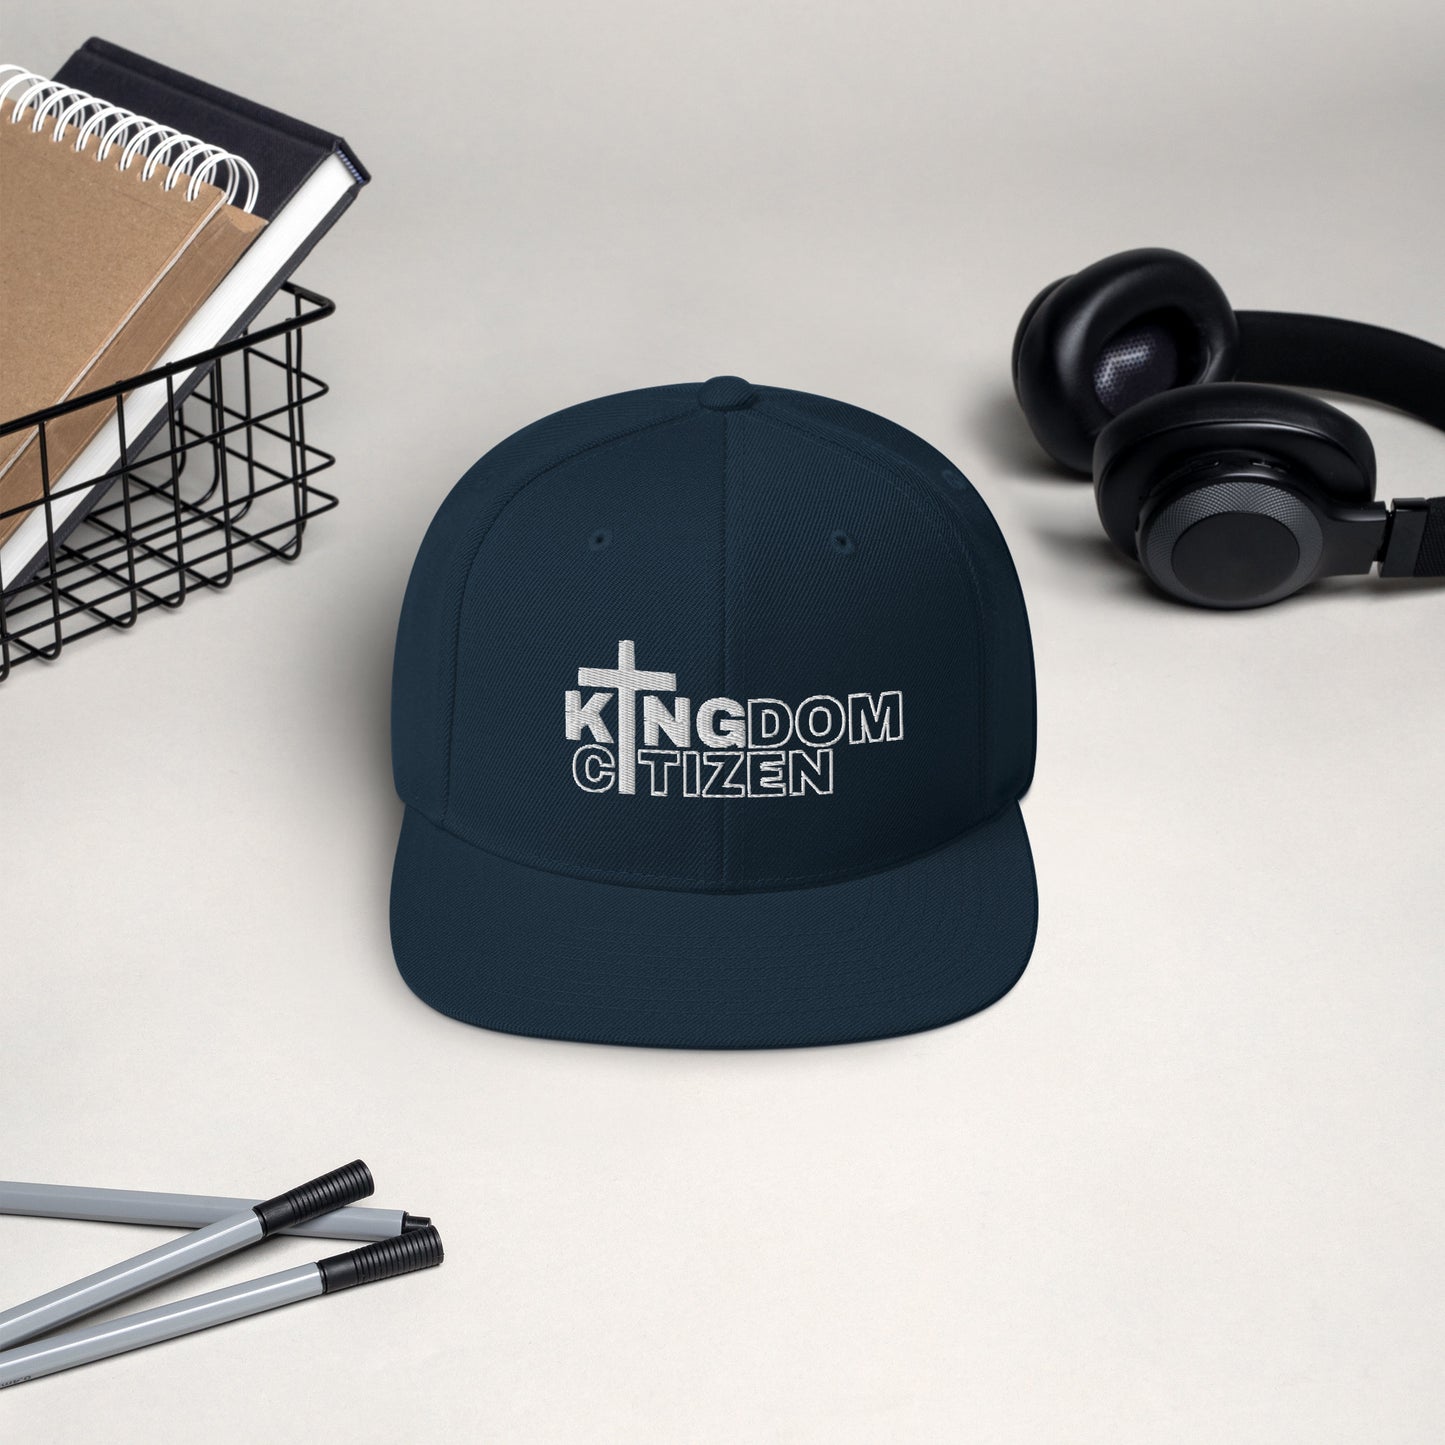 Kingdom Citizen - Snapback Hat - Dark colors